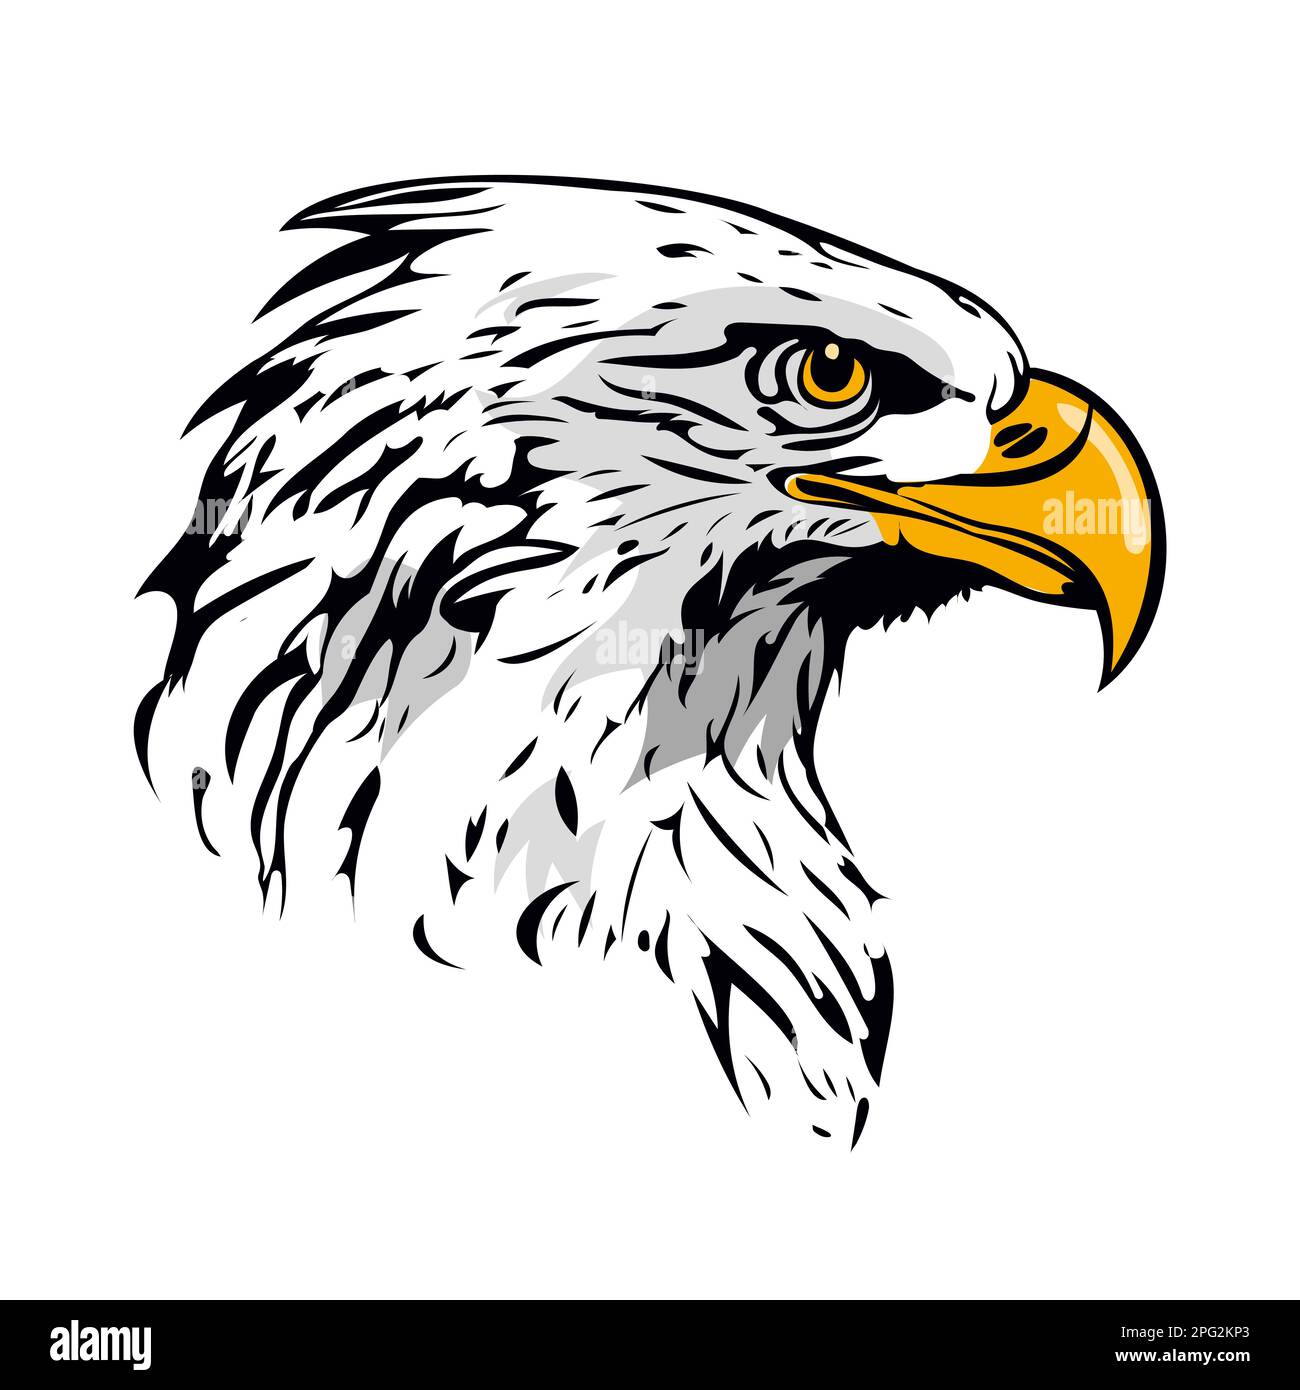 águila poderosa Imágenes recortadas de stock - Página 2 - Alamy